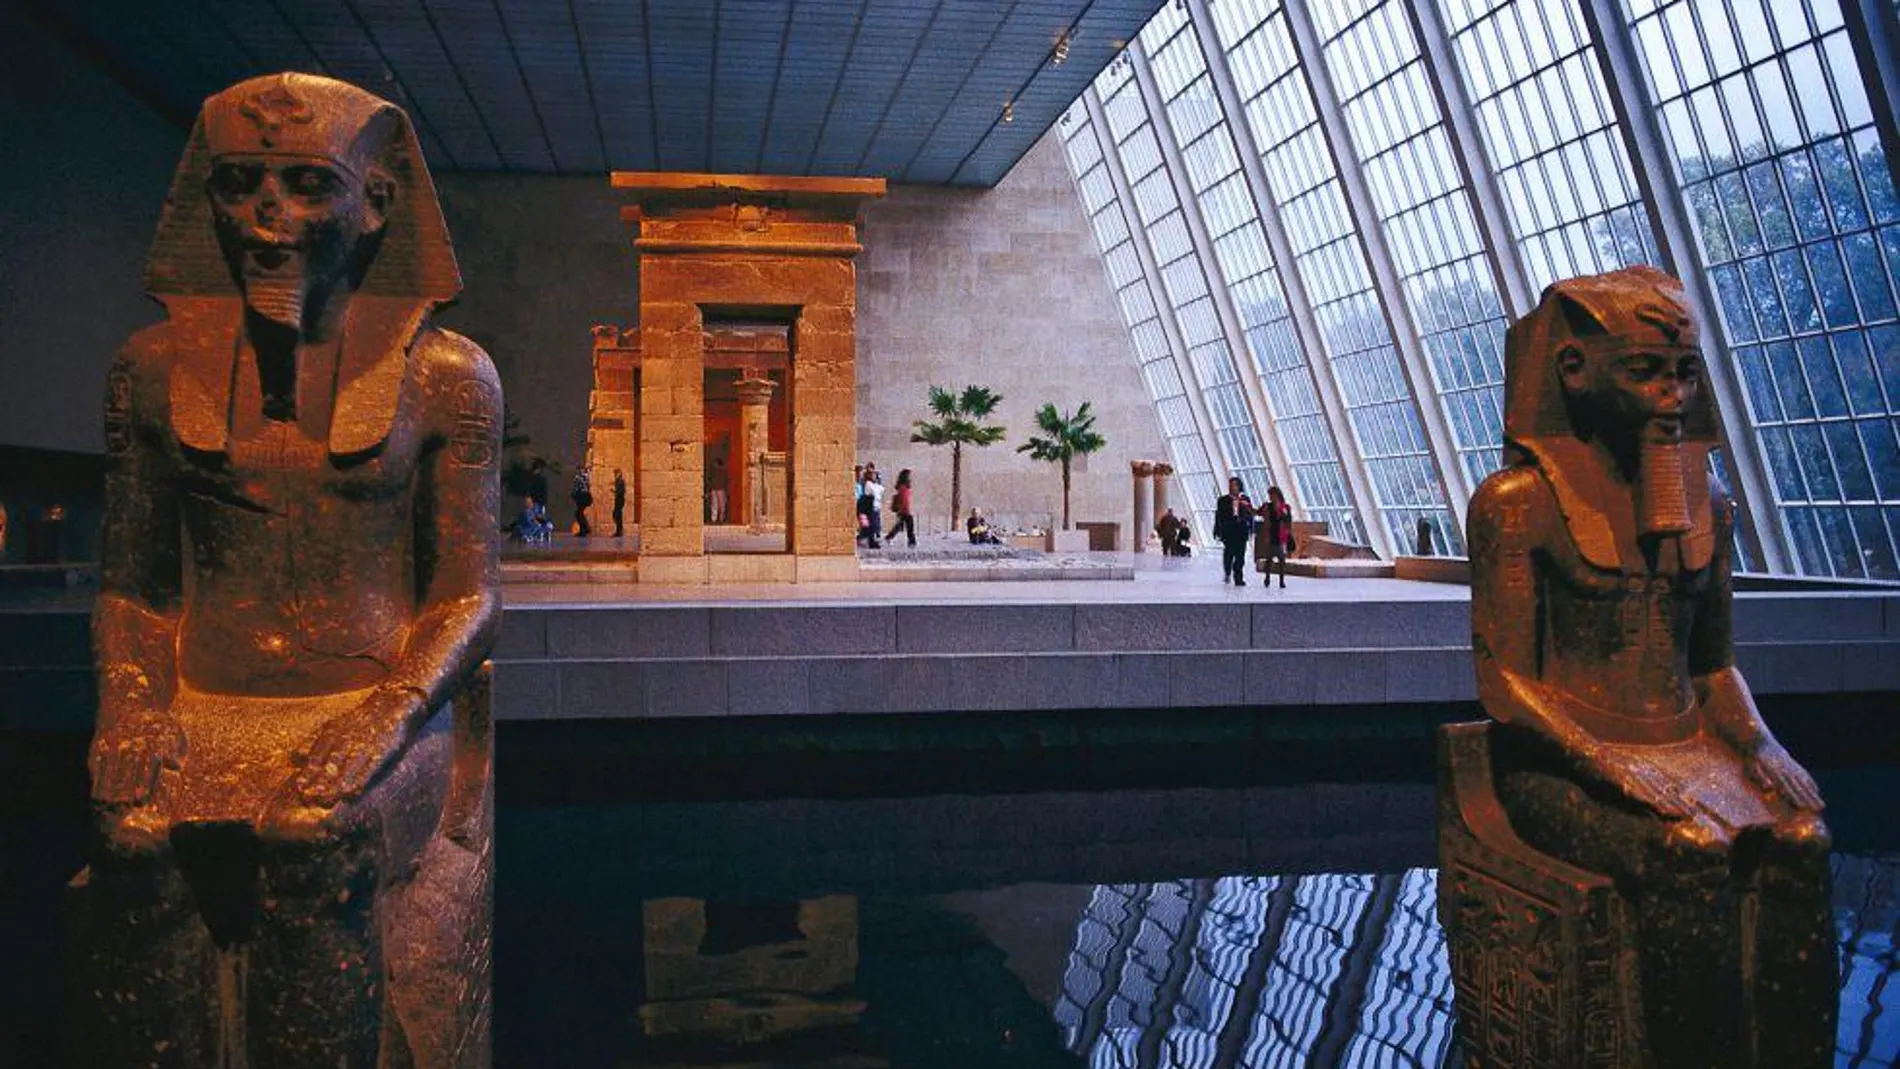 Metropolitan Museum of Art (Nueva York)